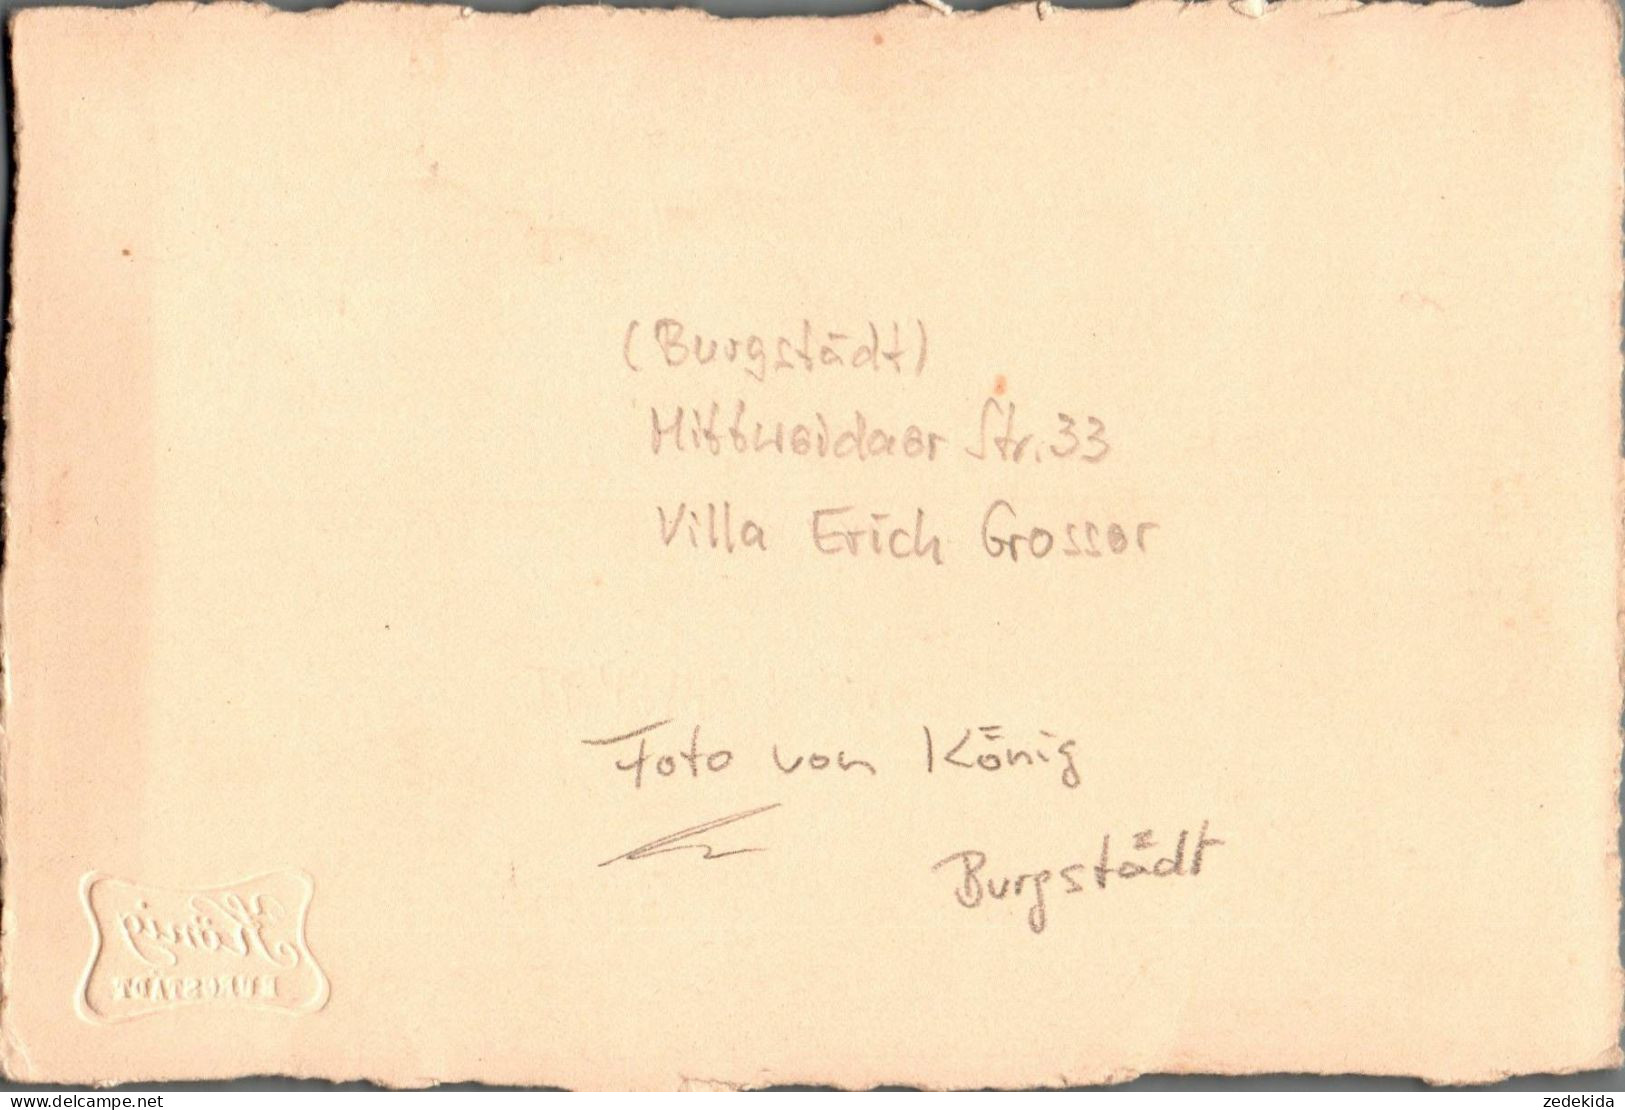 H1704 - Burgstädt Mittweidaer Strasse 33 - Villa Erich Grosser - Foto König - Burgstädt